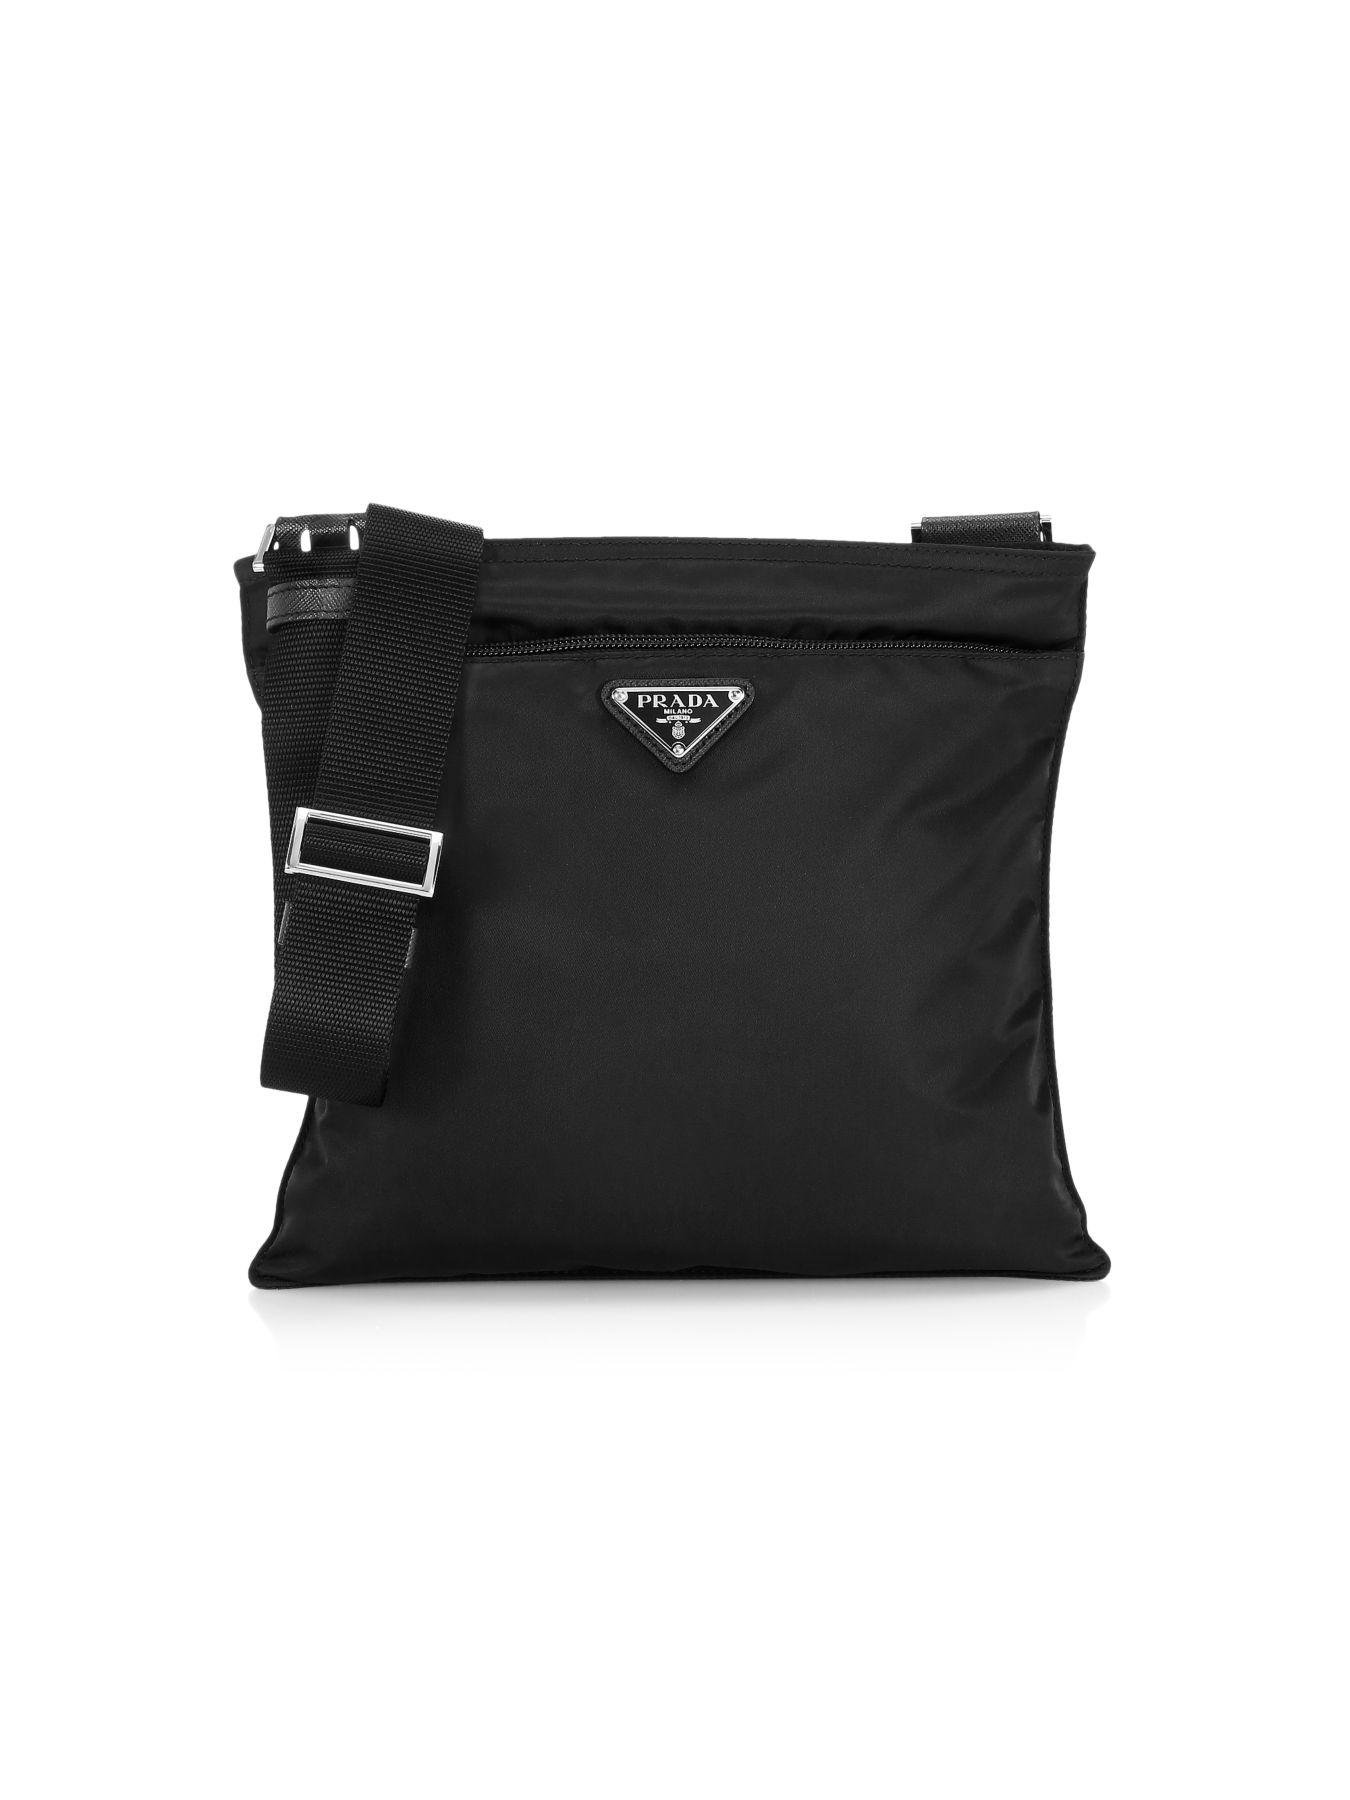 Prada Synthetic Small Nylon Crossbody Bag in Nero-Black (Black) - Save 30% - Lyst